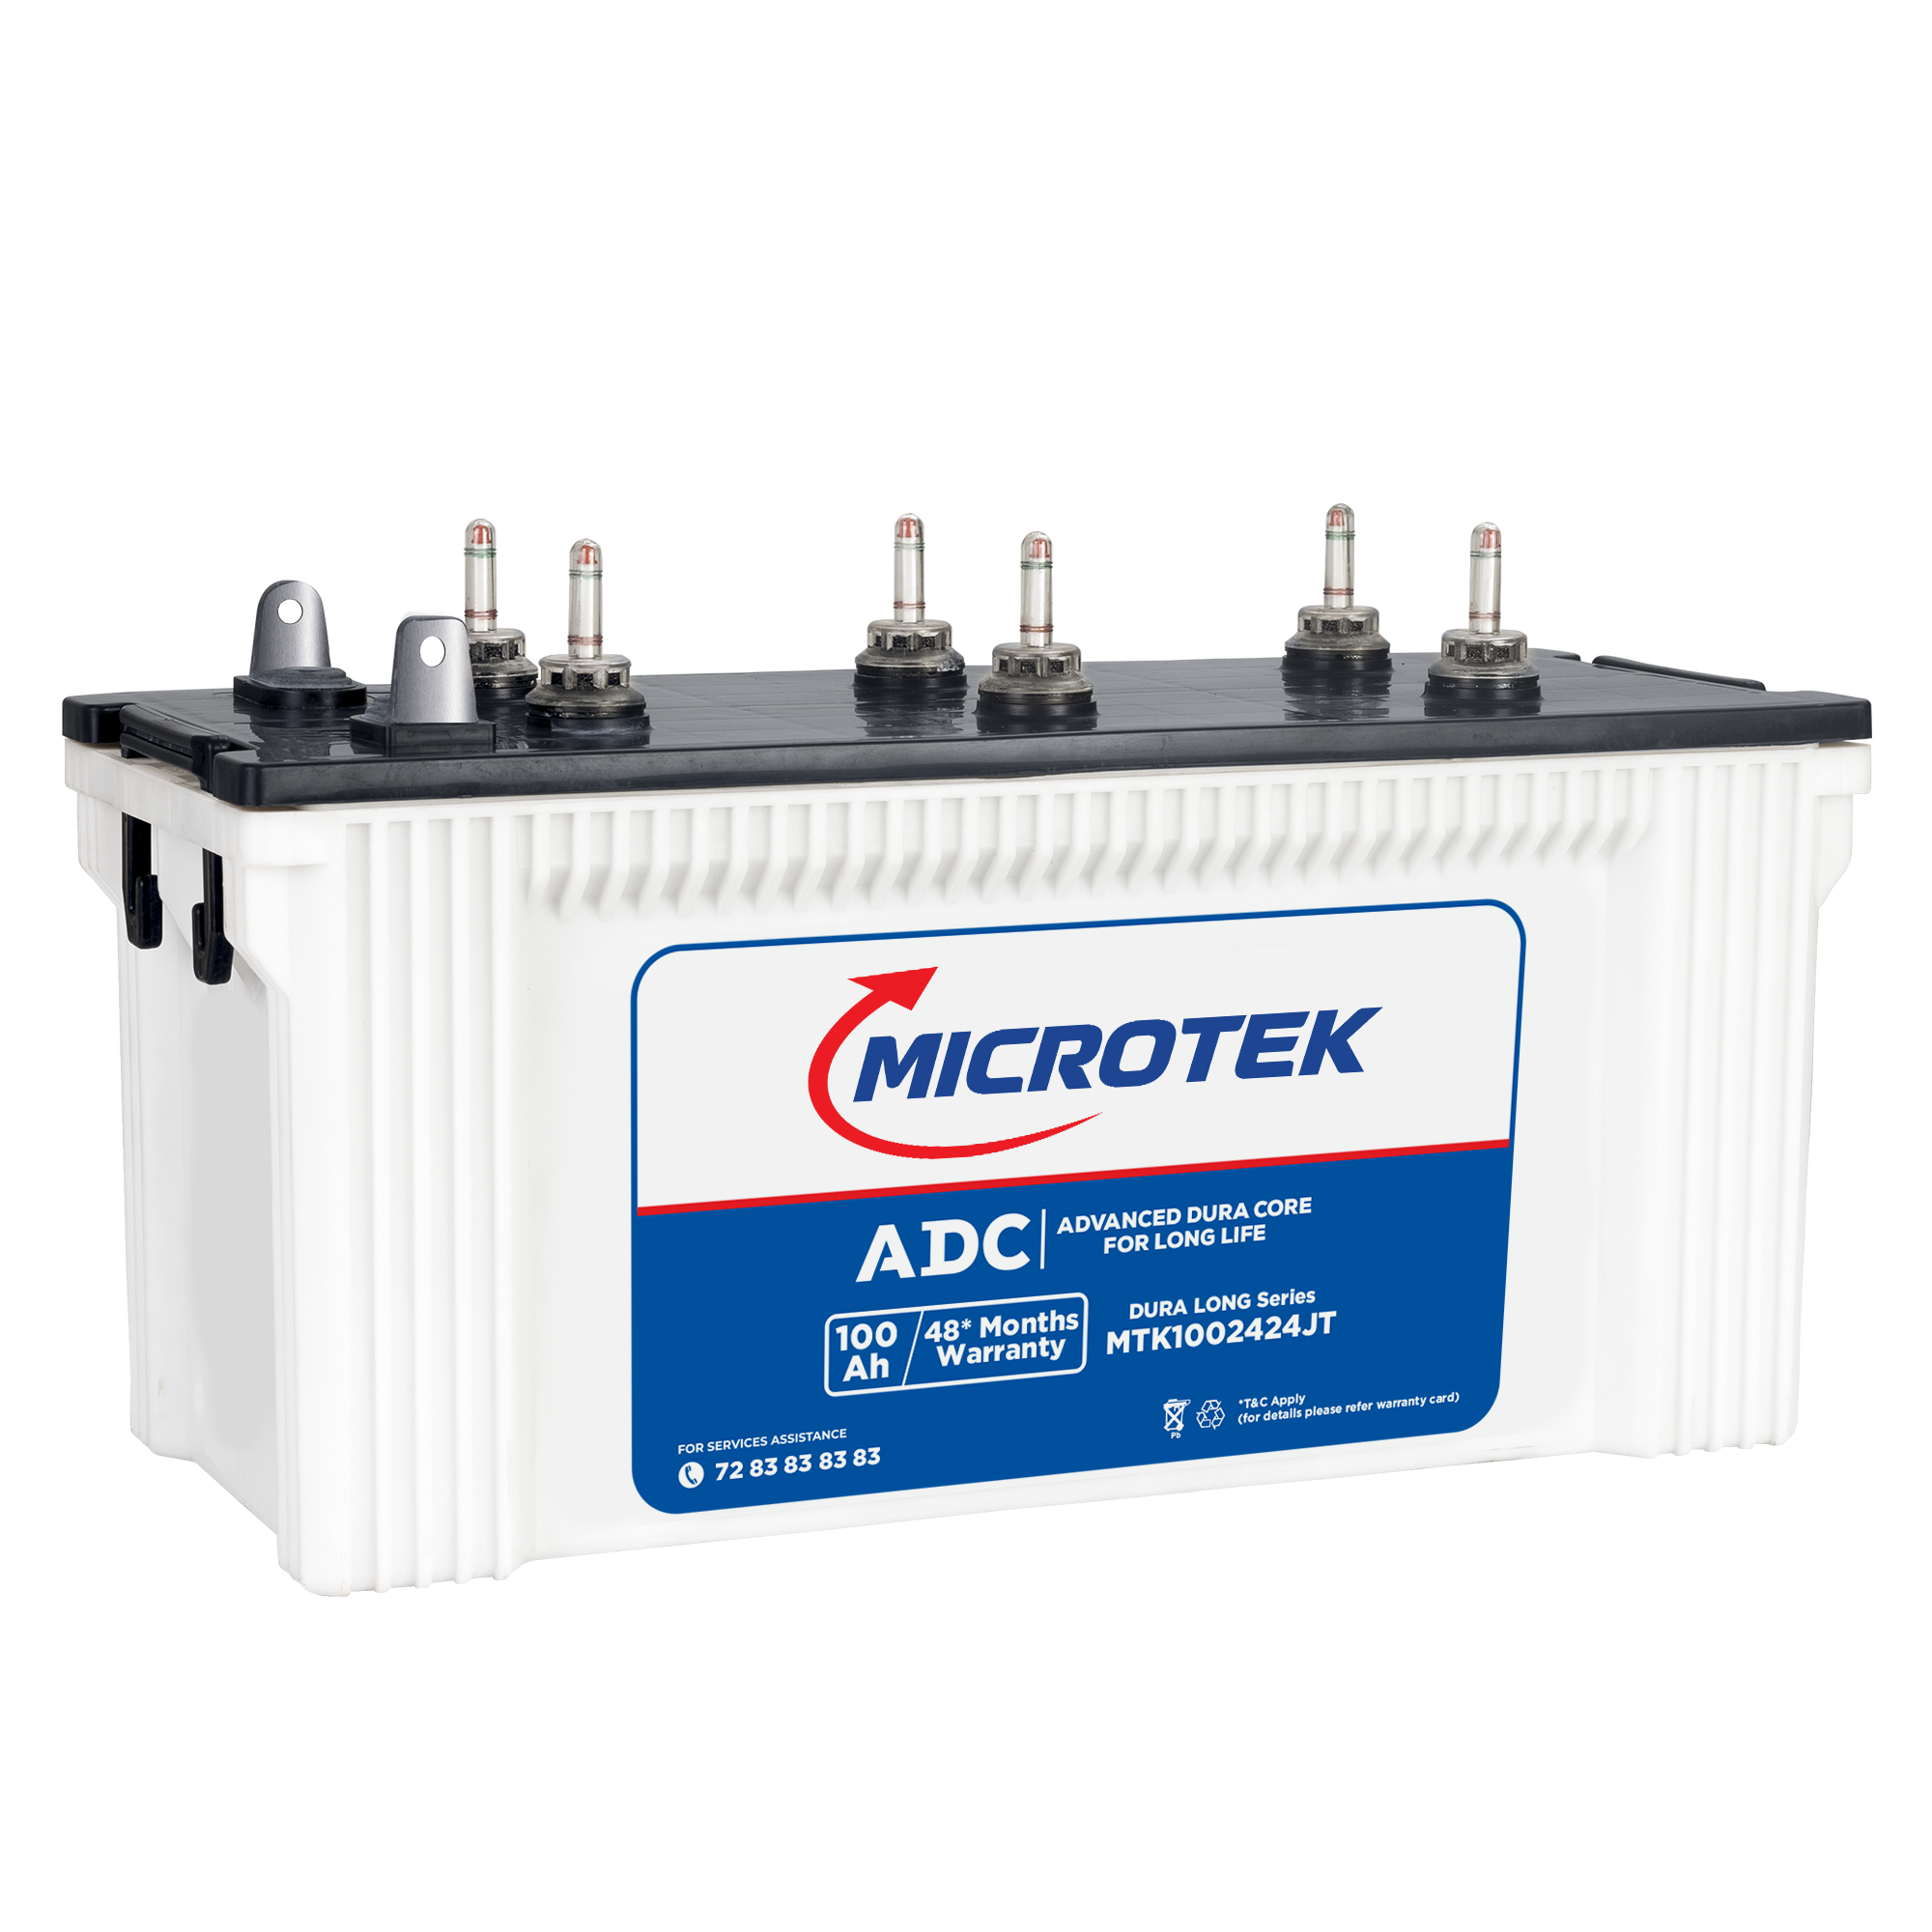 Microtek Dura Long MTK1002424JT 100Ah/12V Inverter Battery With Advanced Dura Core Technology